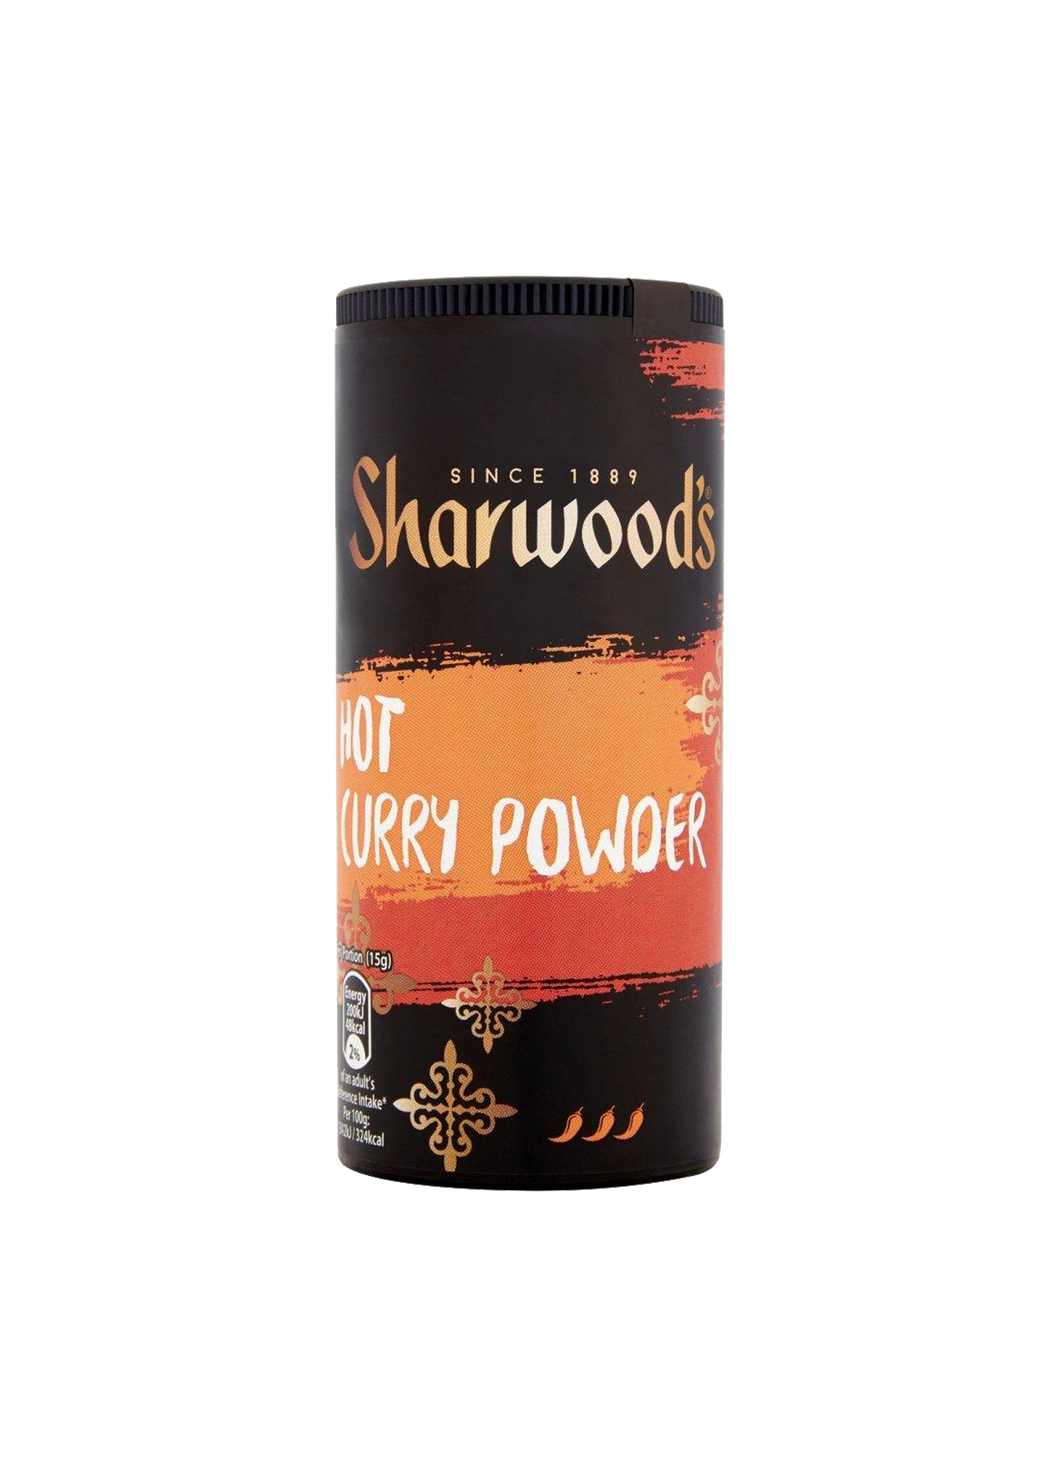 Sharwood's Hot Curry Powder 102g